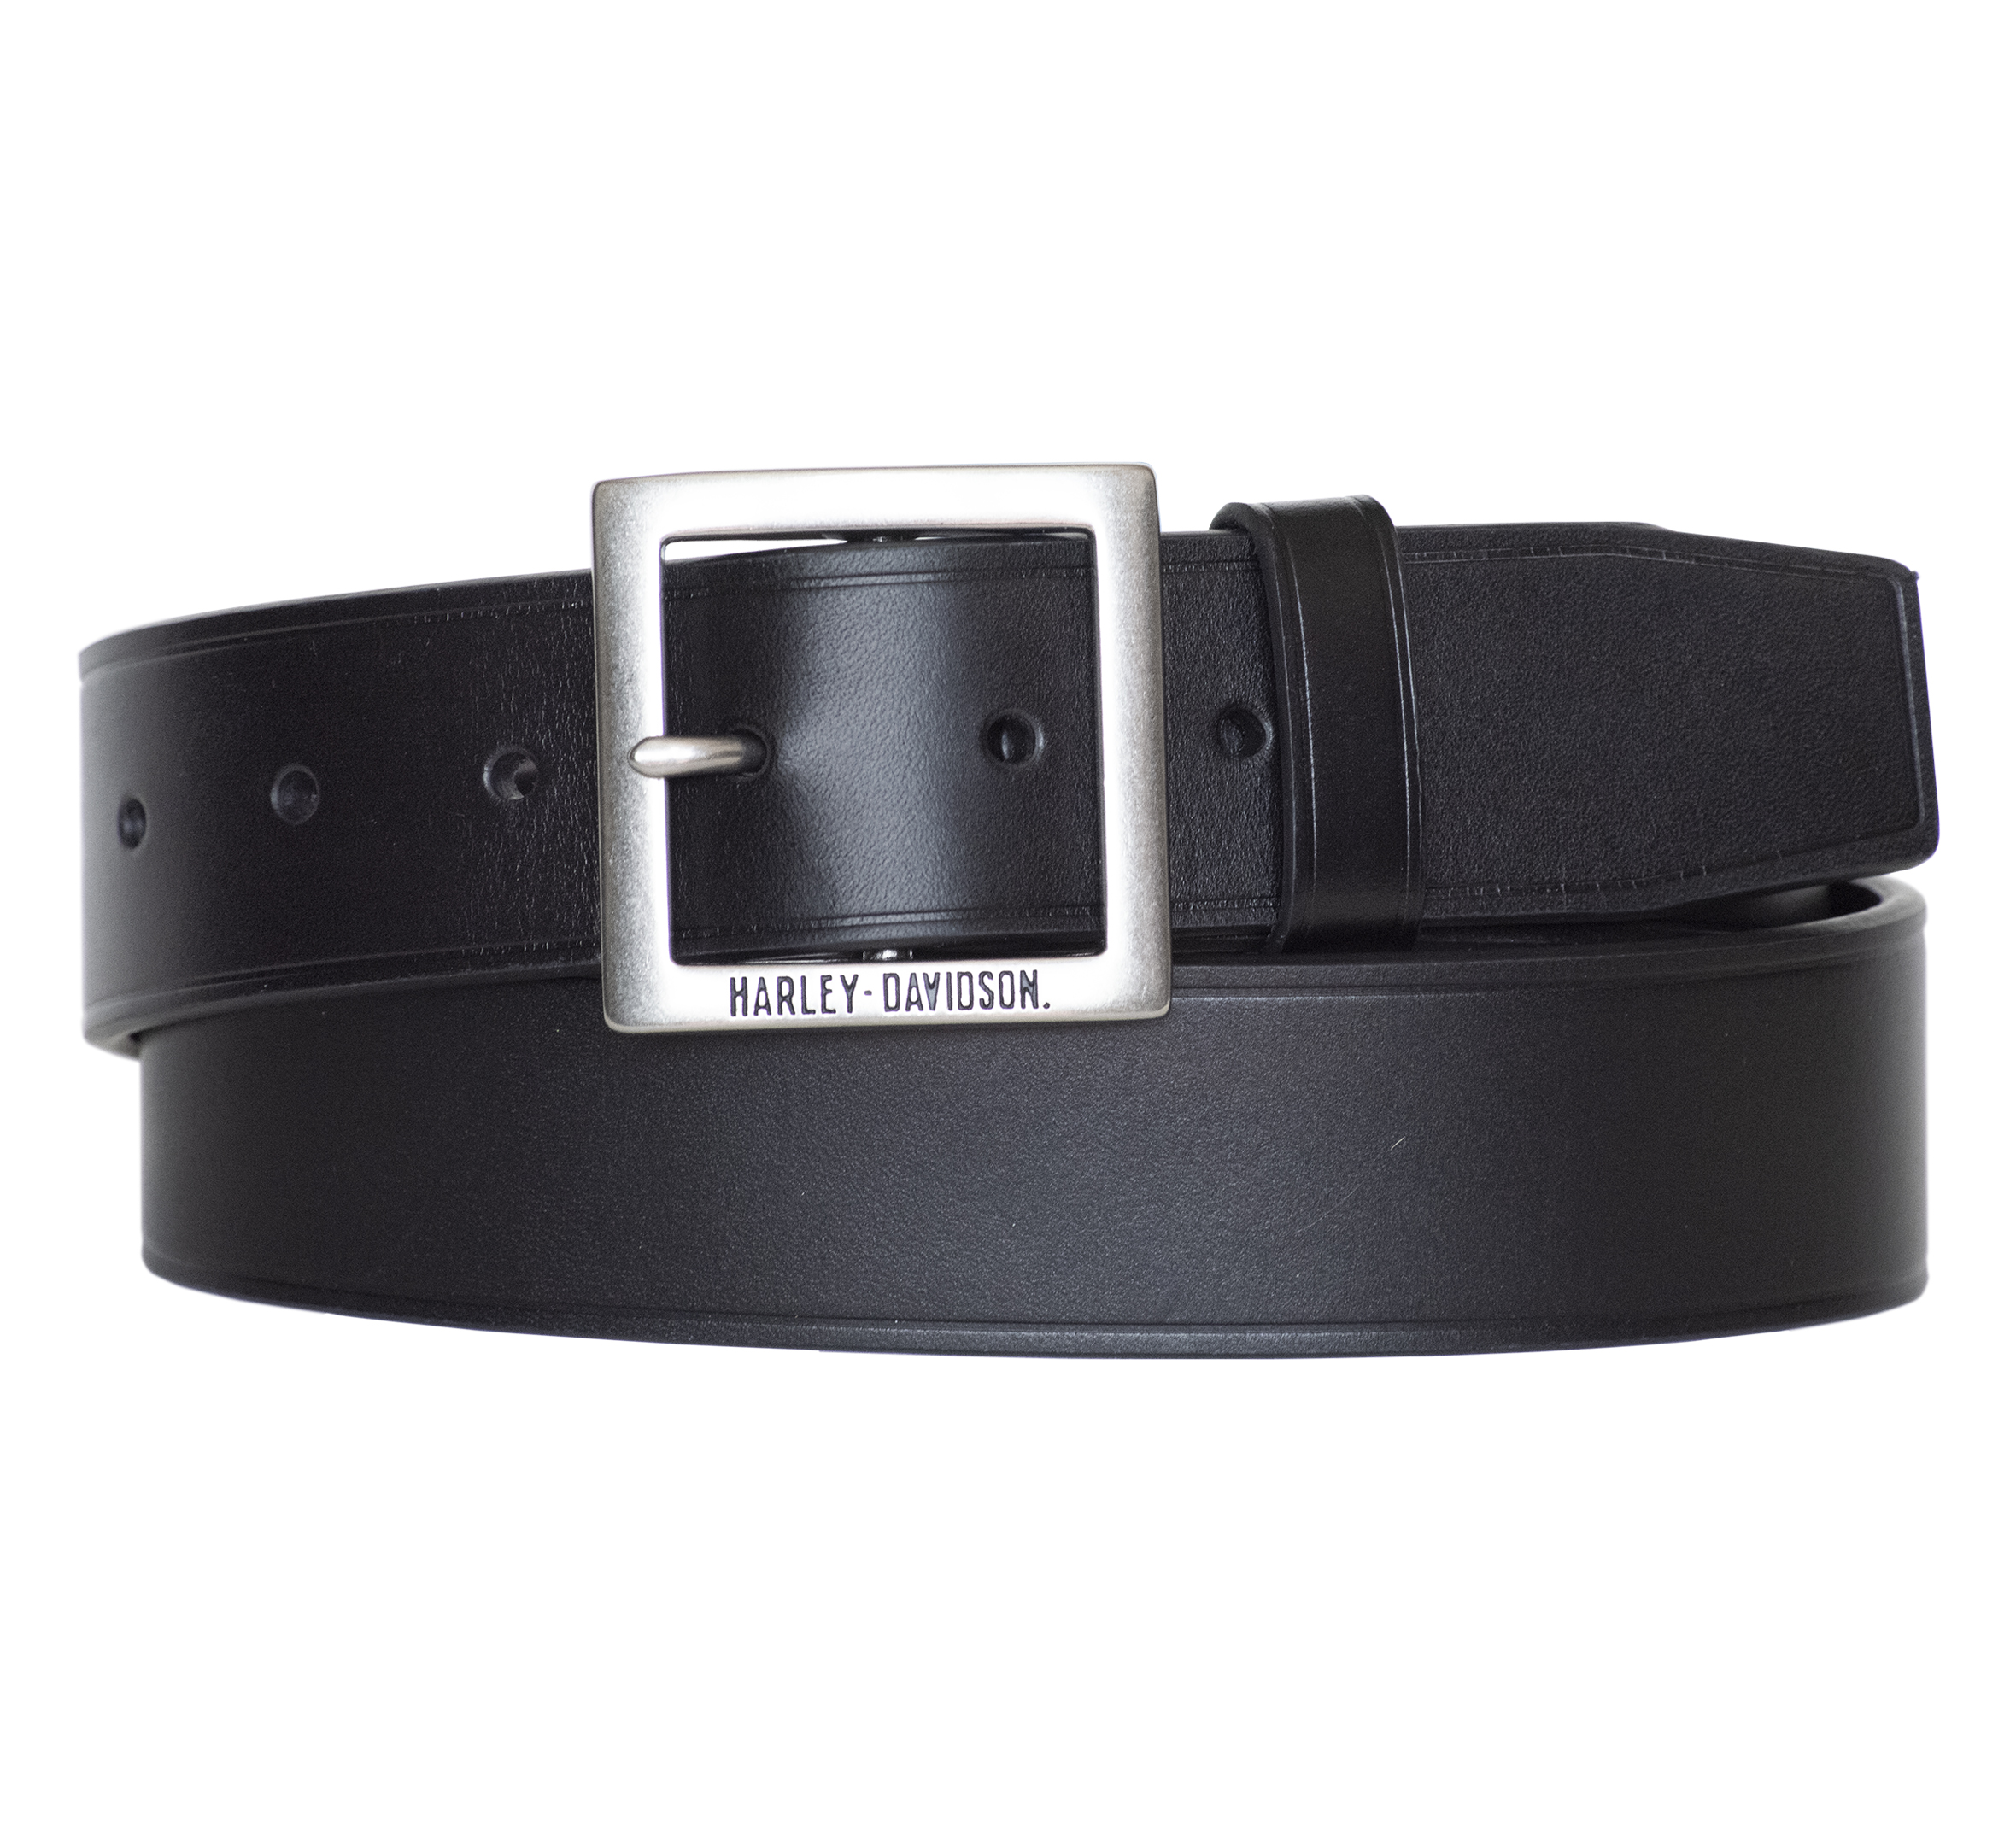 Genuine leather belt for man LAS VEGAS, BLACK colour, metal buckle